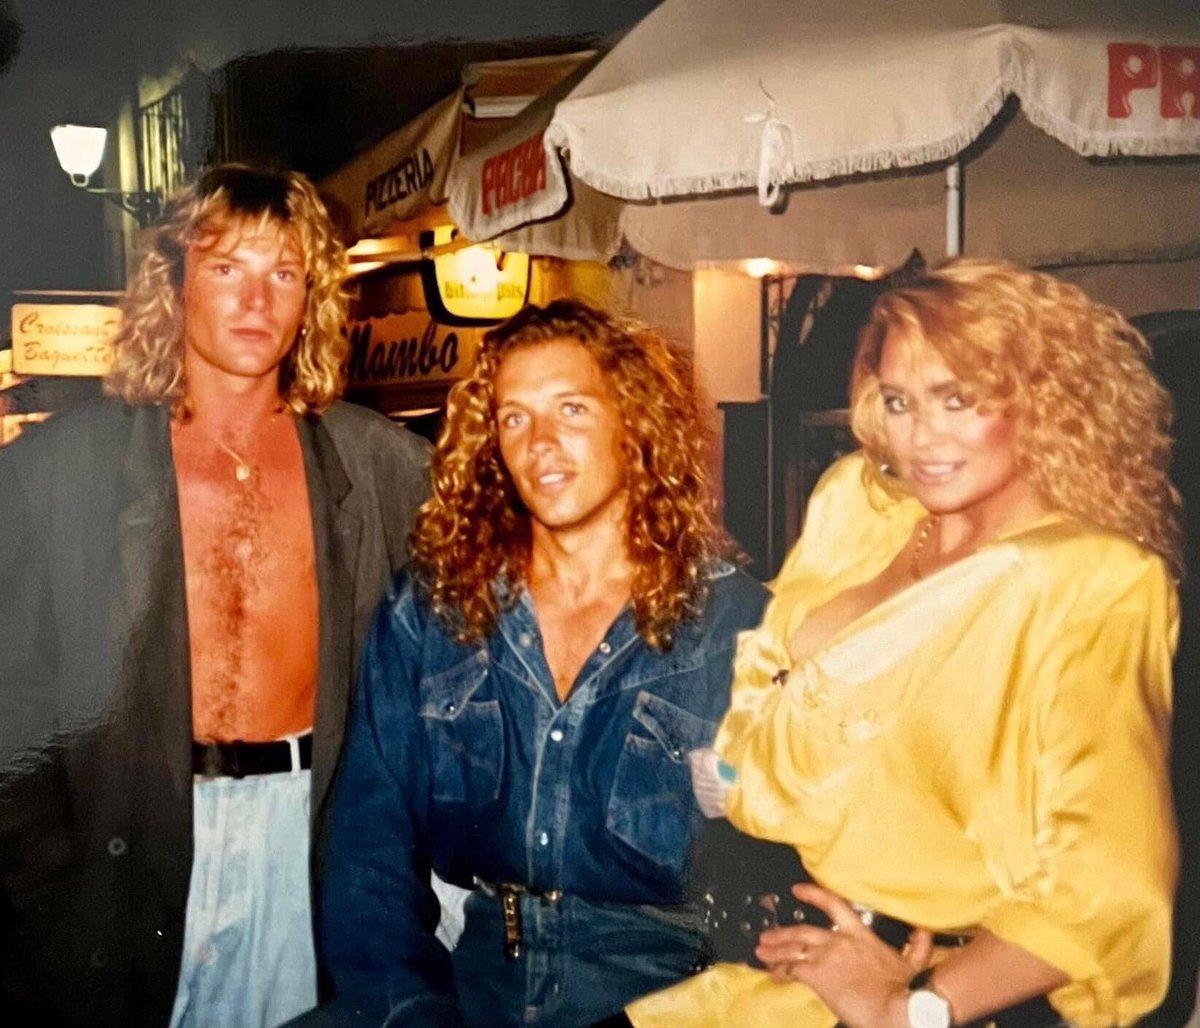 Ibiza Town 1989

Photo Credit ▶️ @chilli__bear__and_pebble__ 

#ibiza #ibizapast #ibizafashion #fashion #80s #80sfashion #80shair #girlsofibiza #ladiesofibiza #fashionstyle #eighties #eightiesfashion